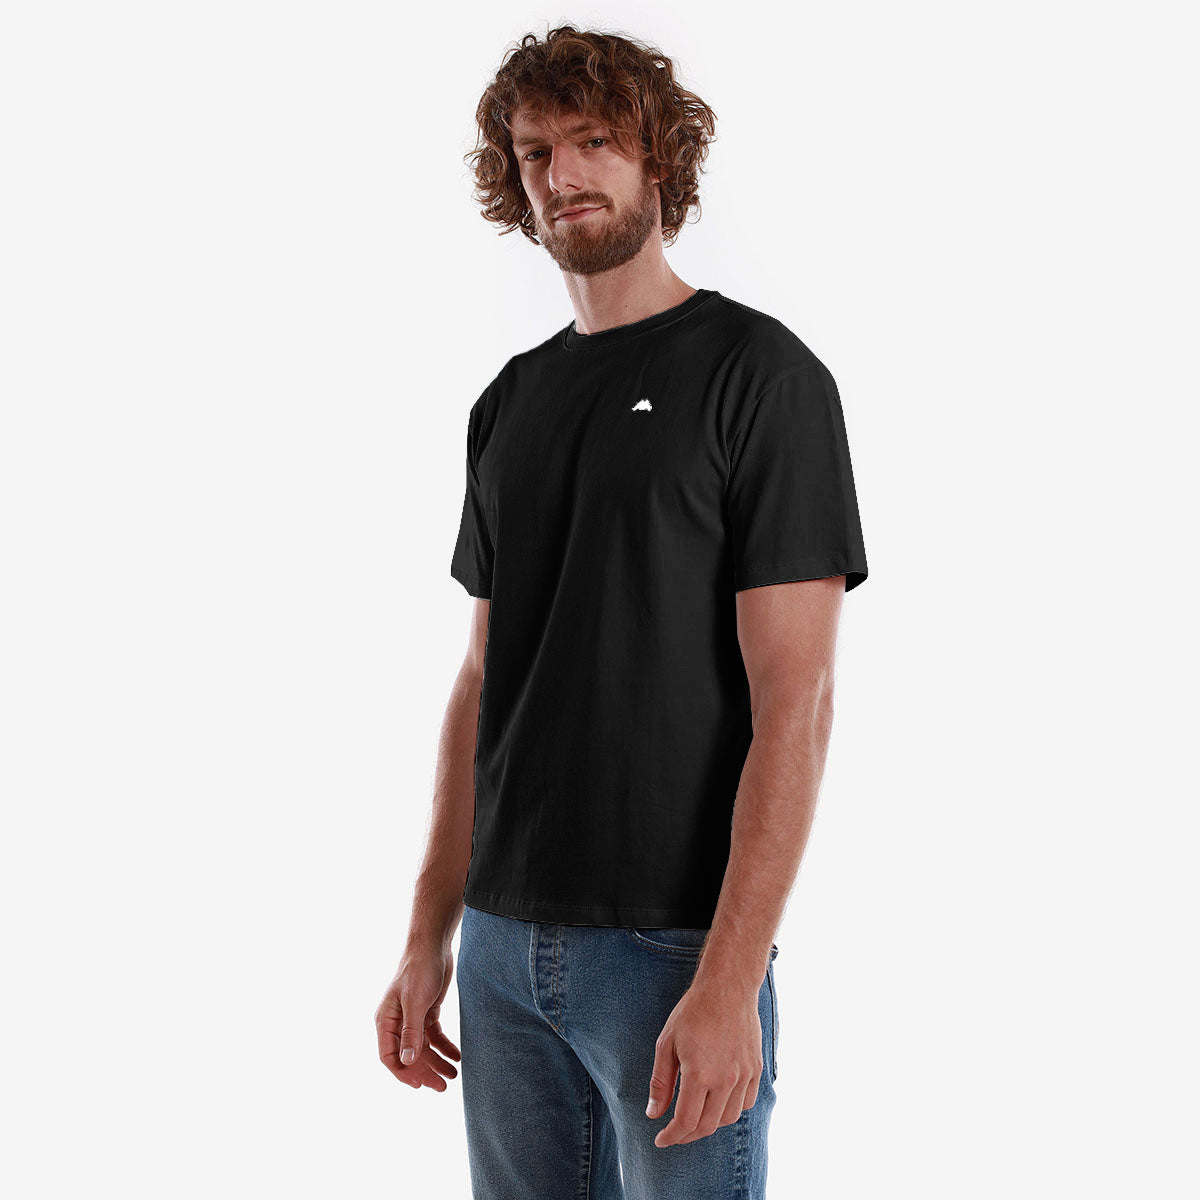 Camiseta Darphis negro unisexe - Imagen 4